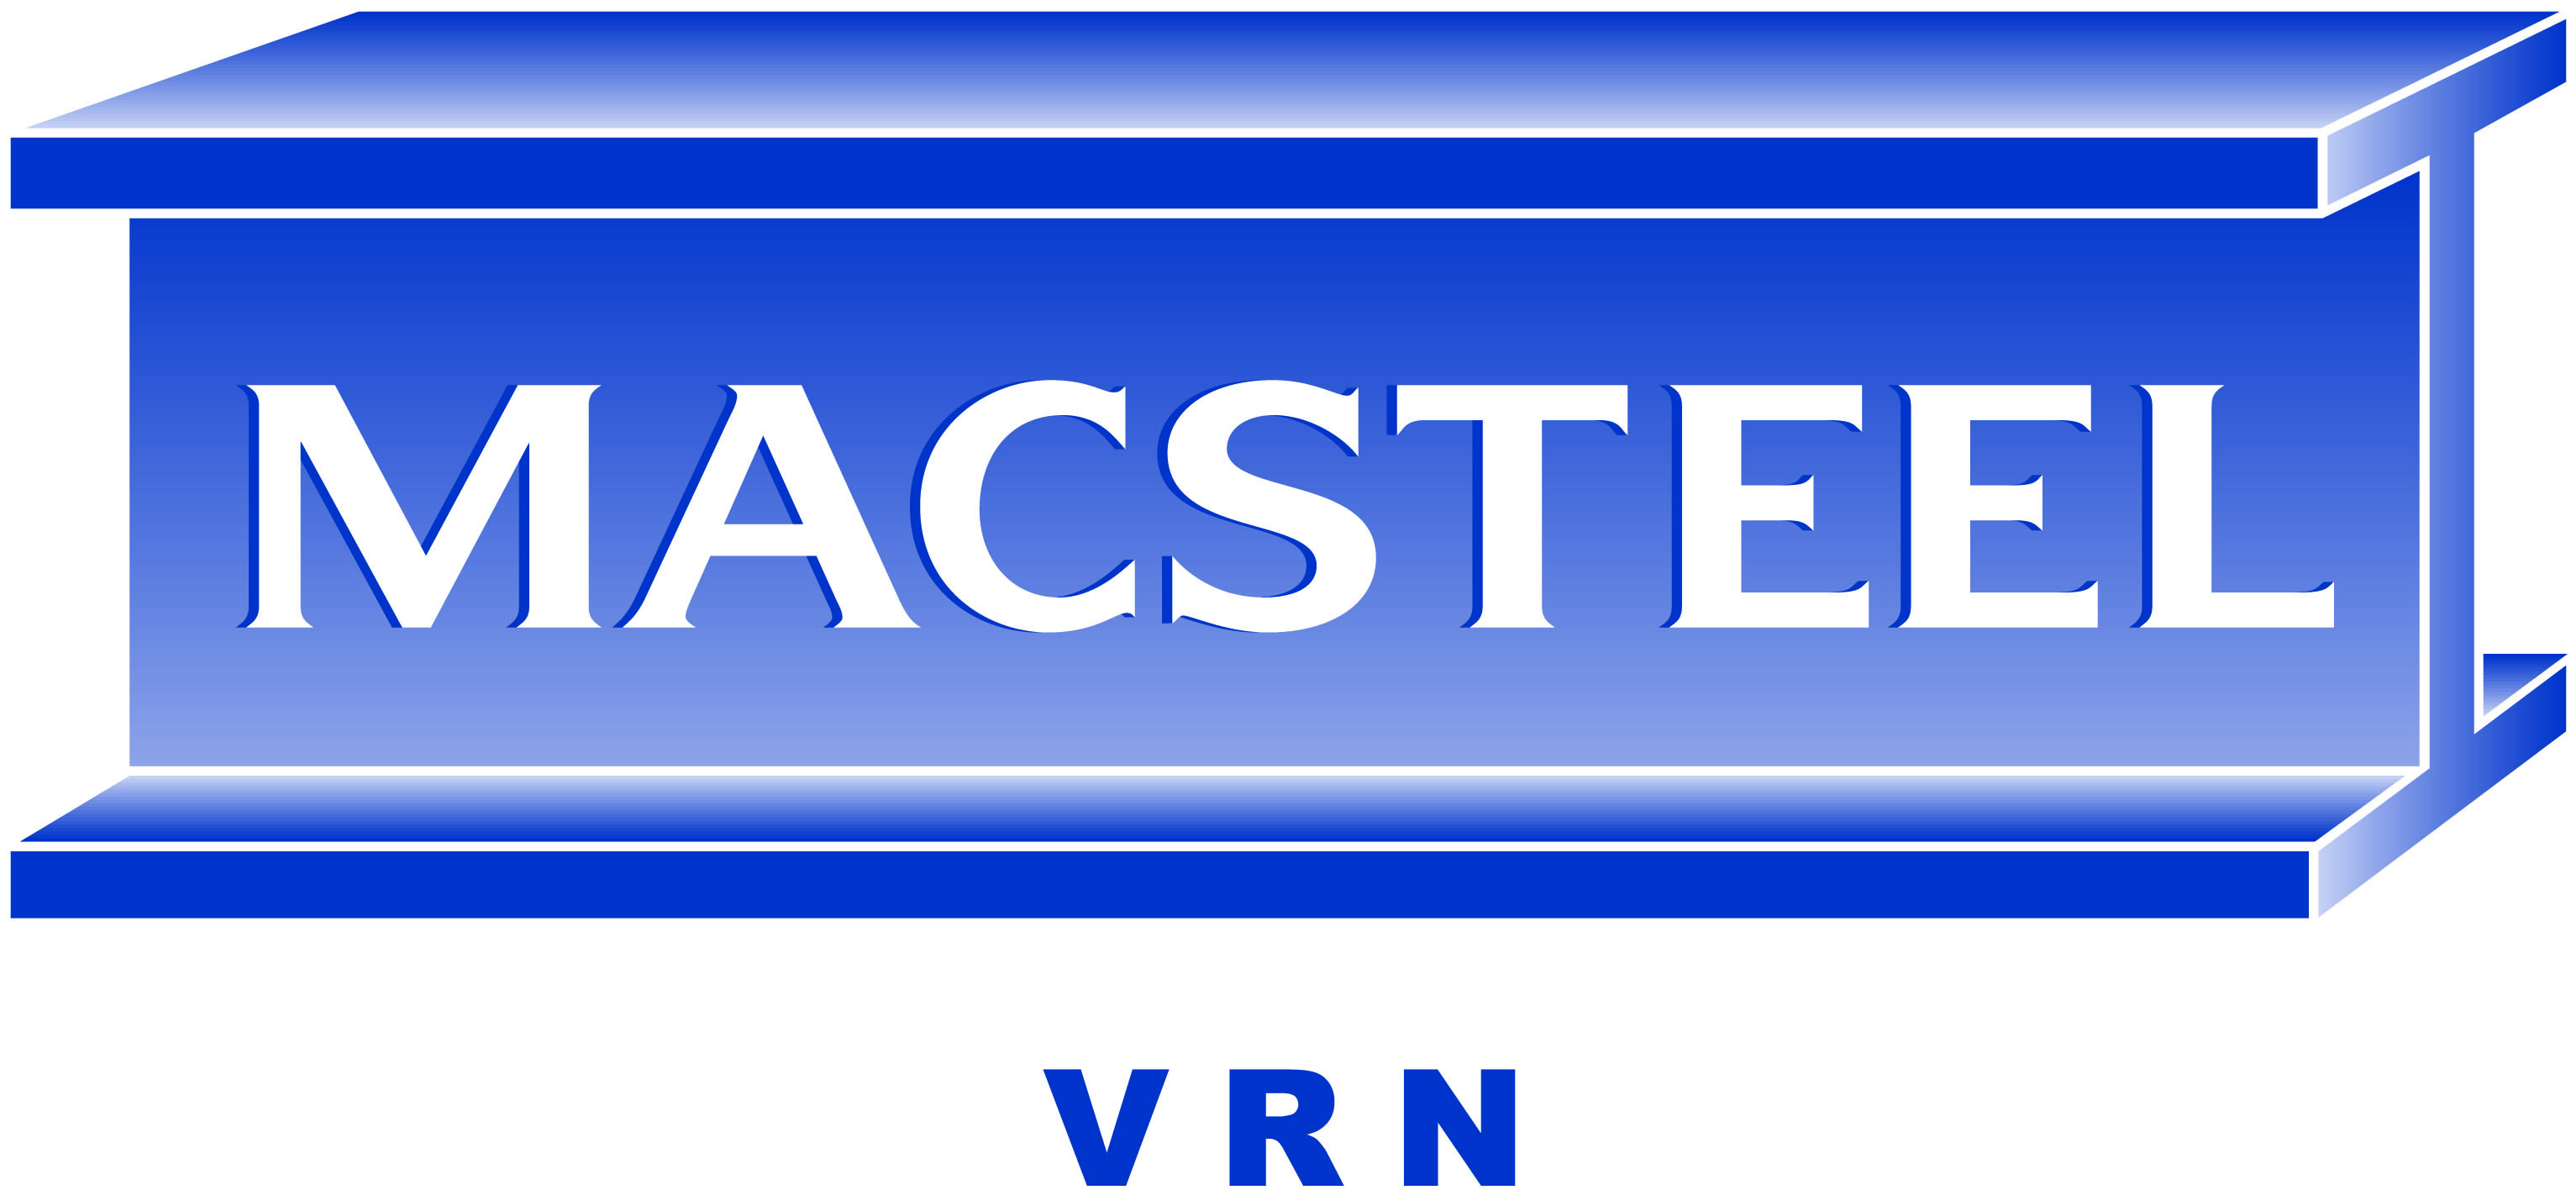 Macsteel Vrn - Port Elizabeth logo